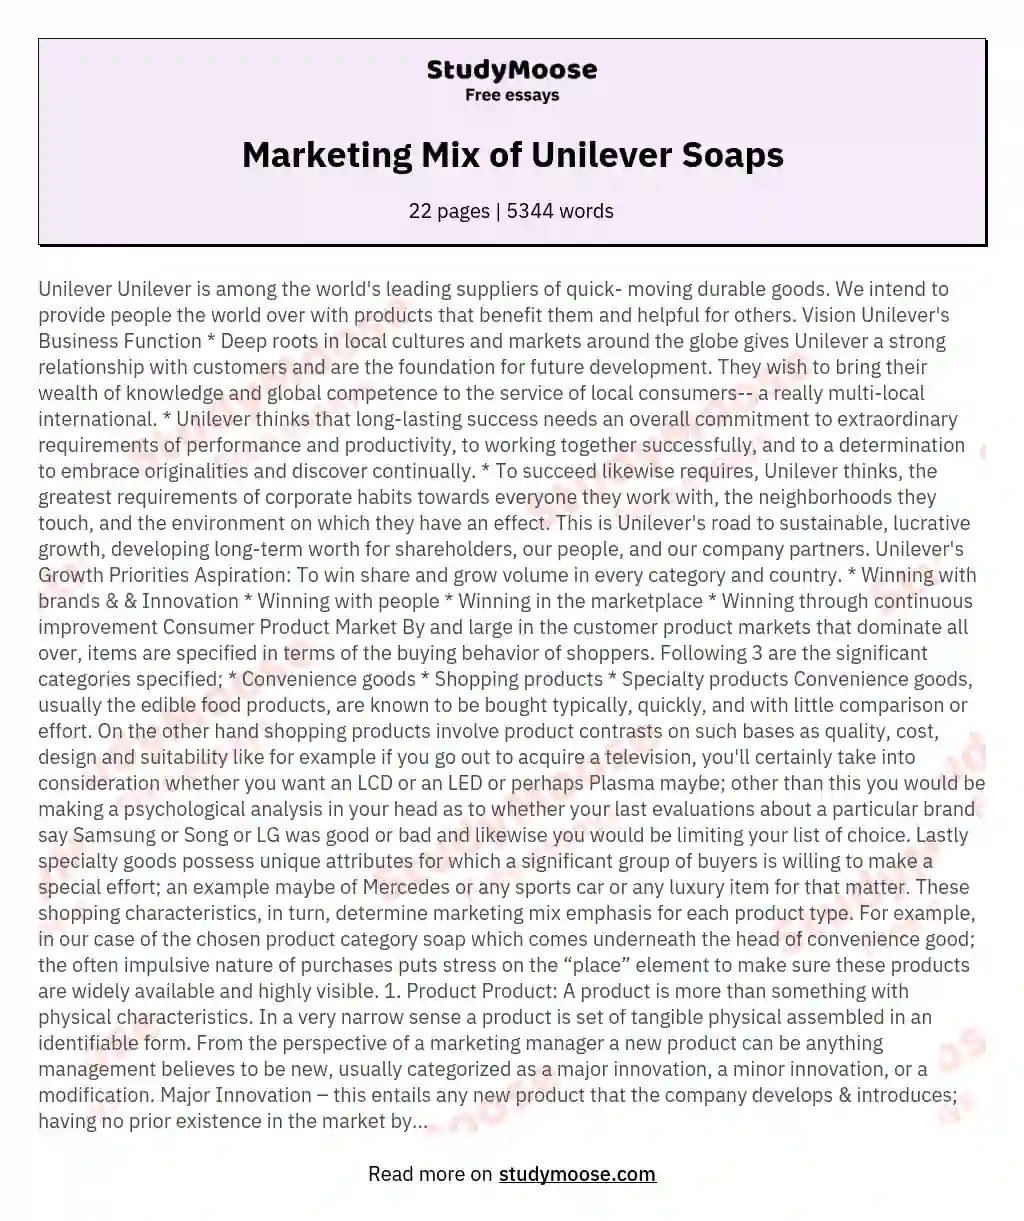 Marketing Mix of Unilever Soaps essay